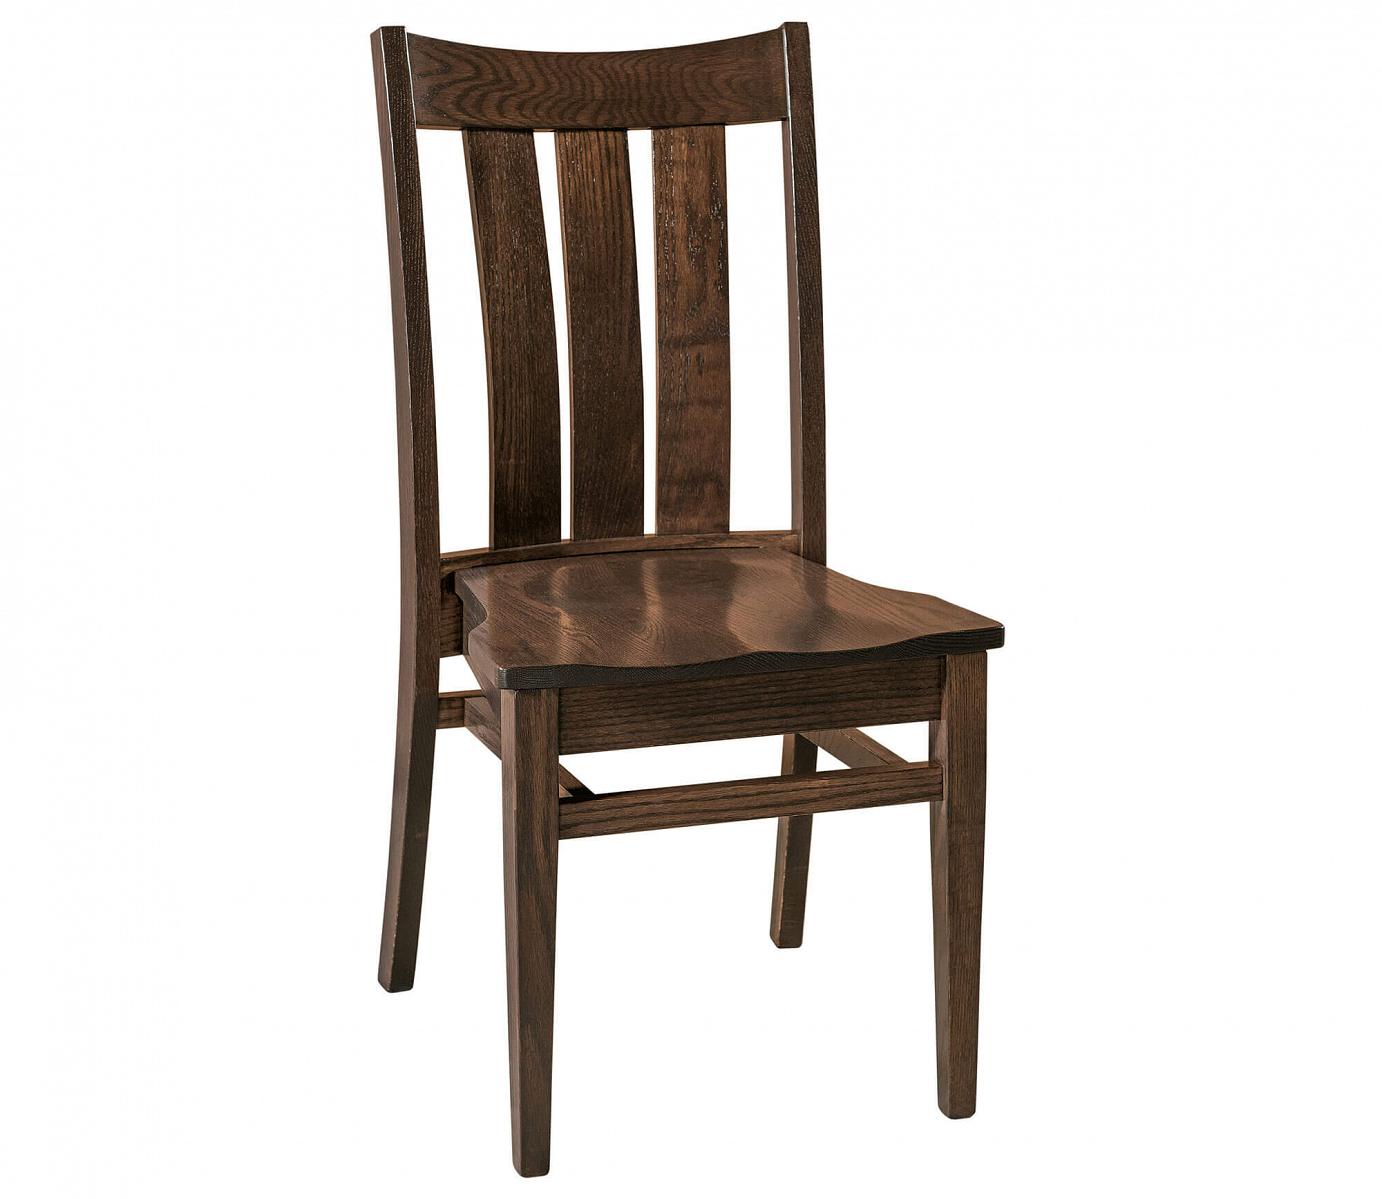 RH Yoder Lamont Side Chair